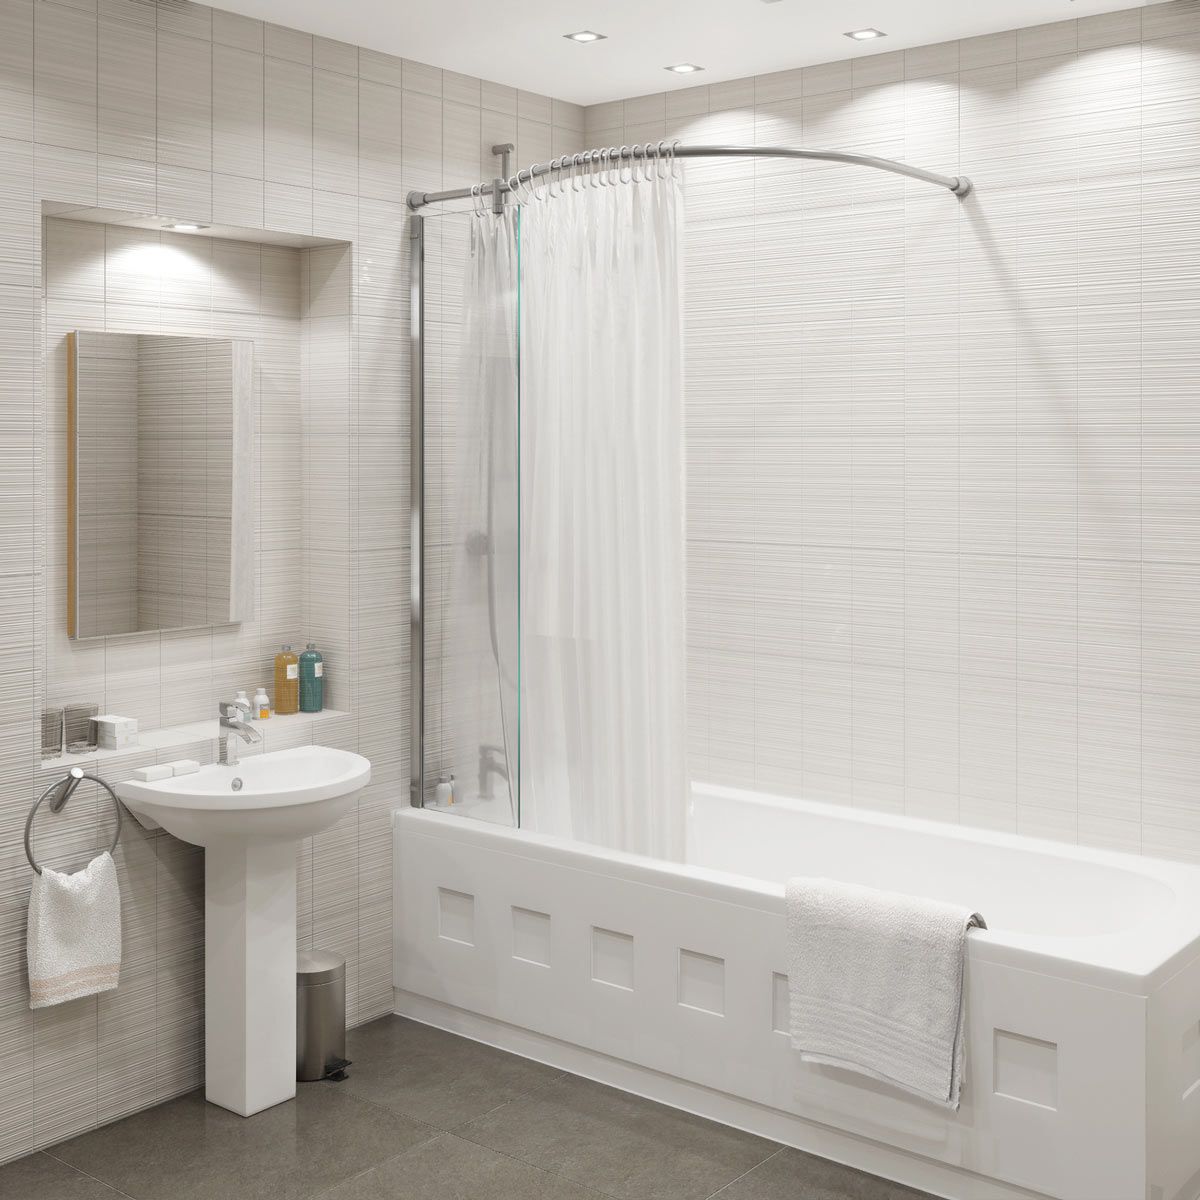 Kudos Inspire Over Bath Shower Panel, Large Circular Shower Curtain Rail